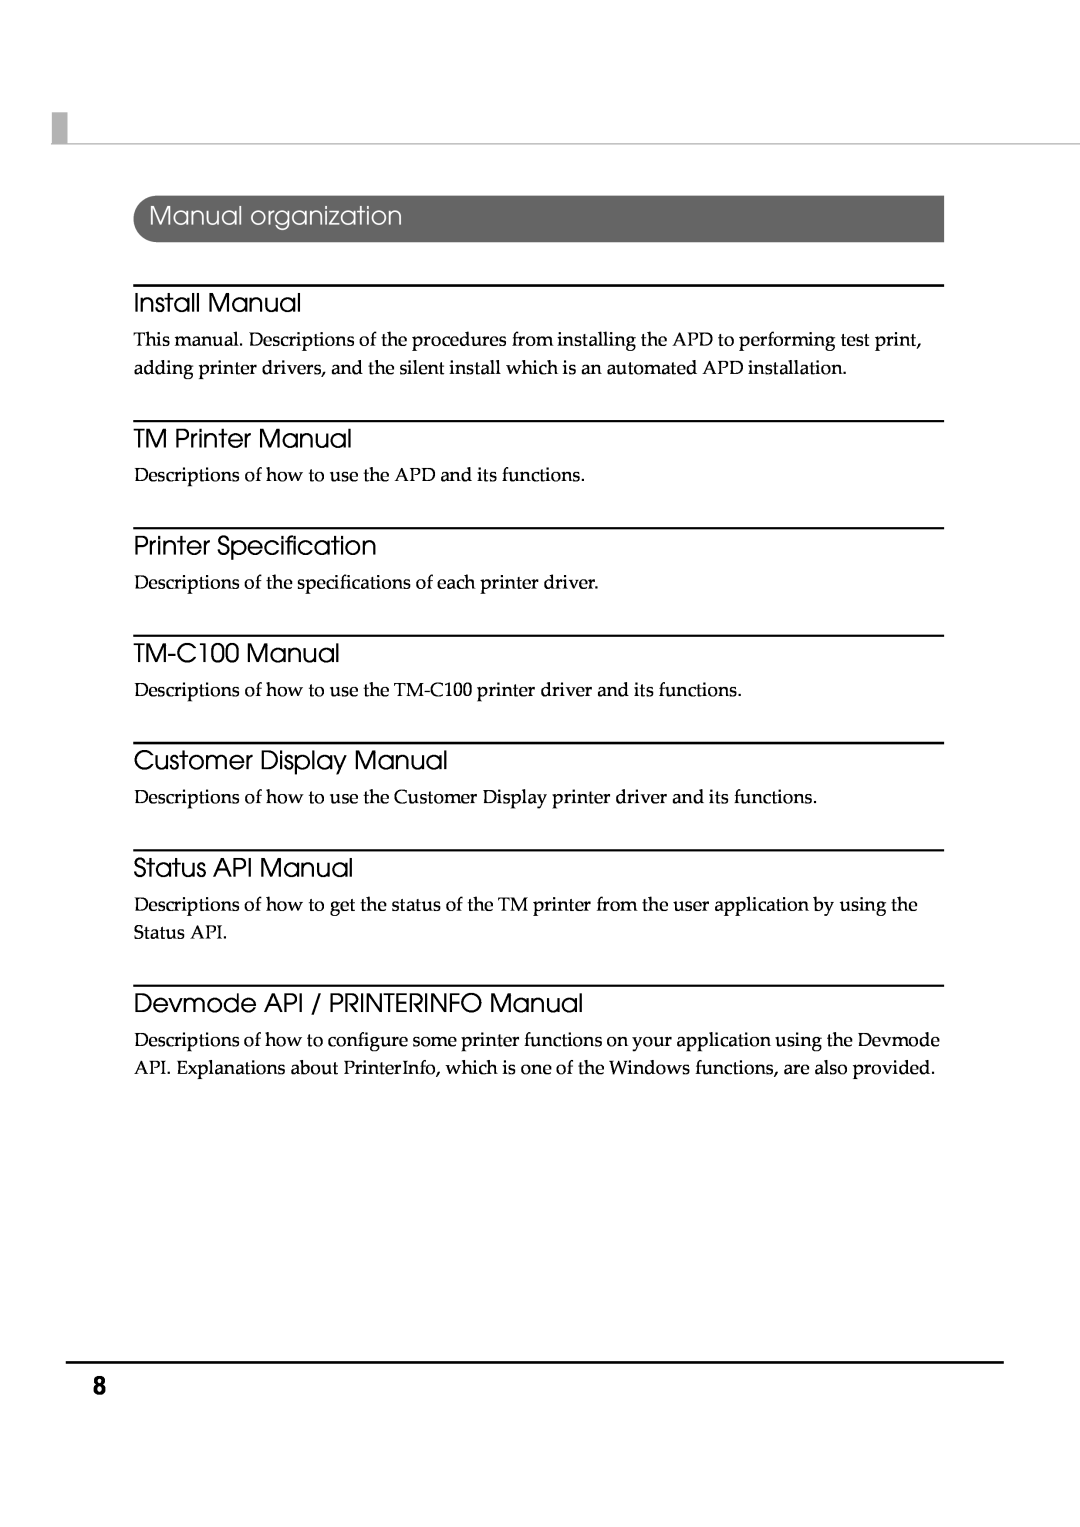 Epson M00002104 Manual organization, Install Manual, TM Printer Manual, Printer Specification, TM-C100 Manual 